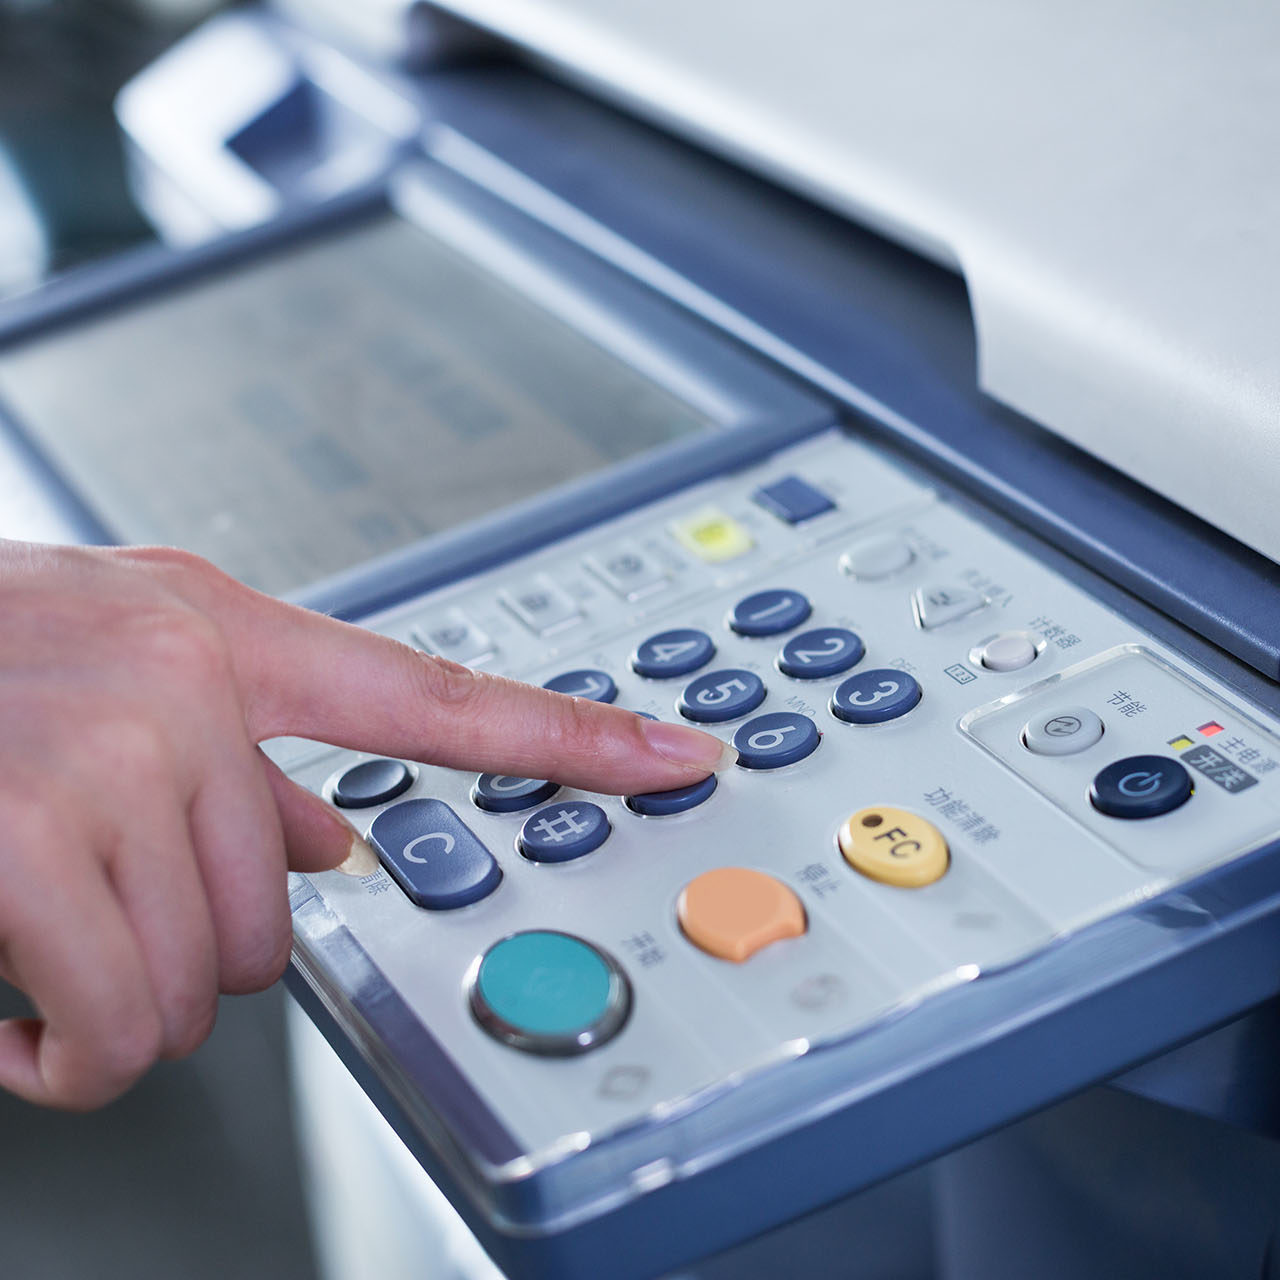 hand press button on panel of printer